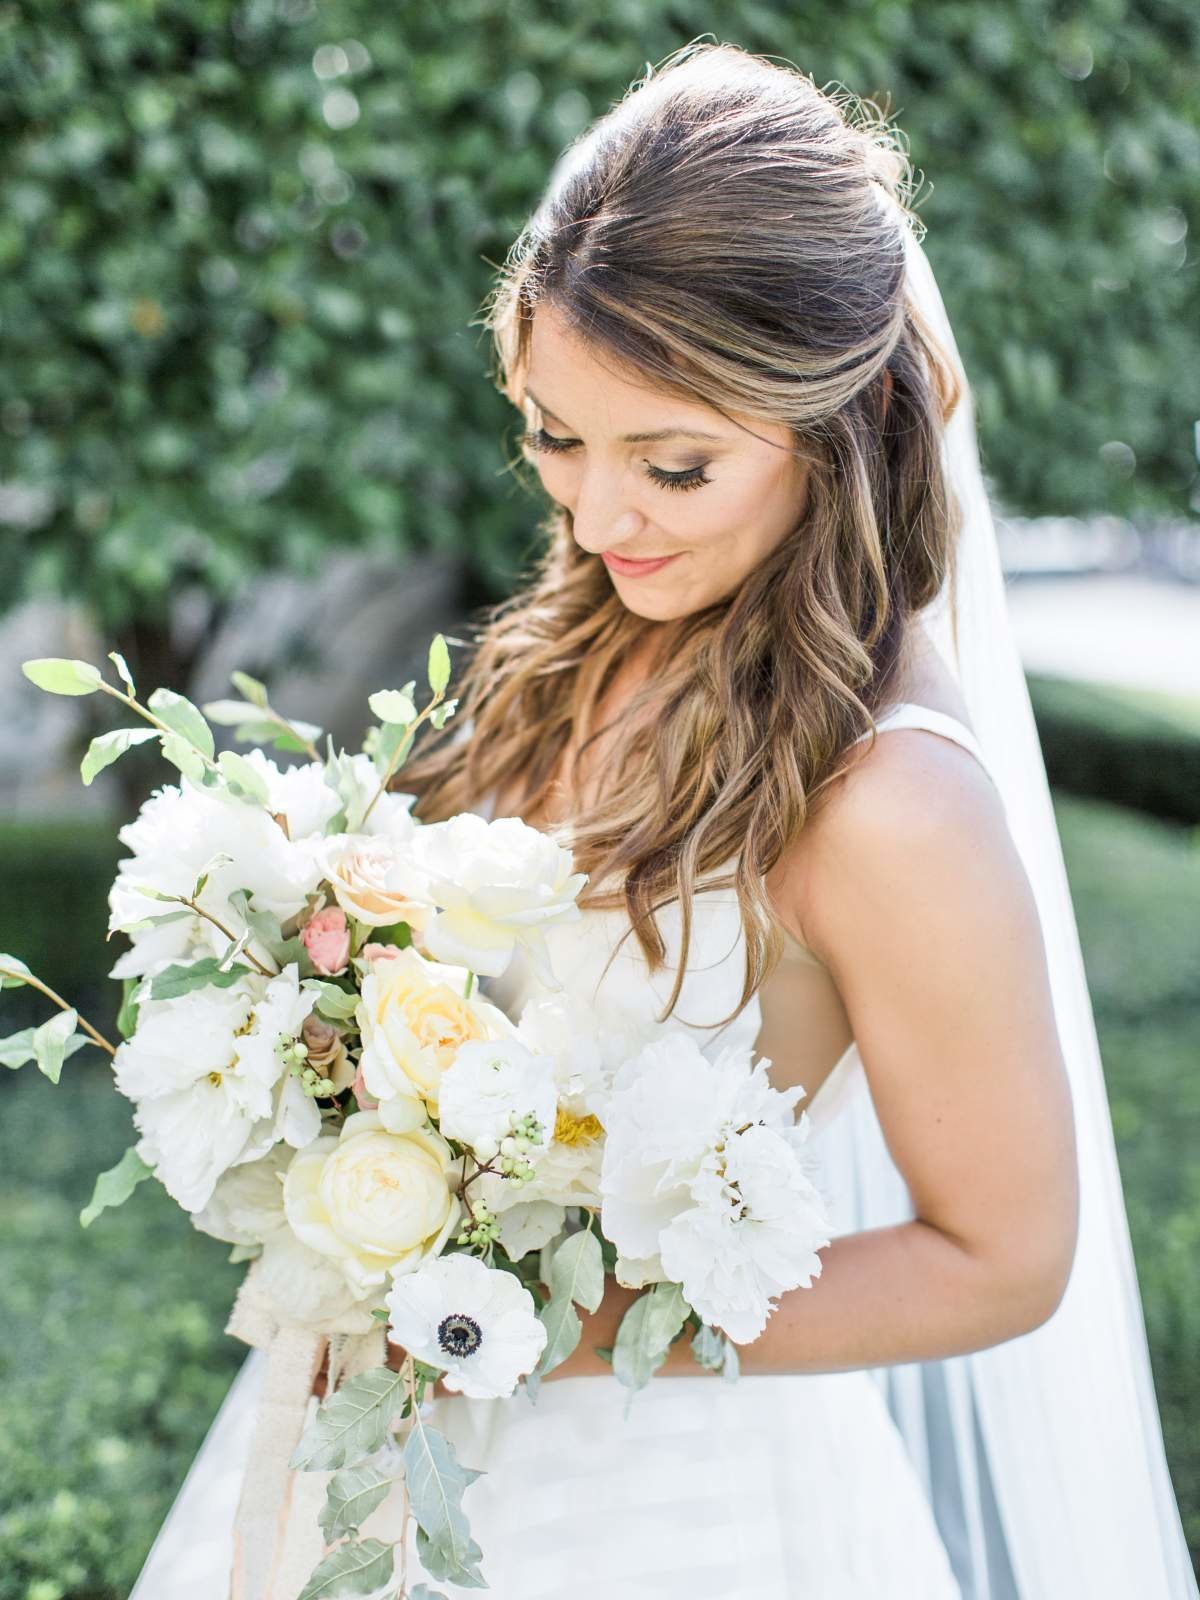 michigan-garden-style-bridal-bouquet-in-blush-and-white